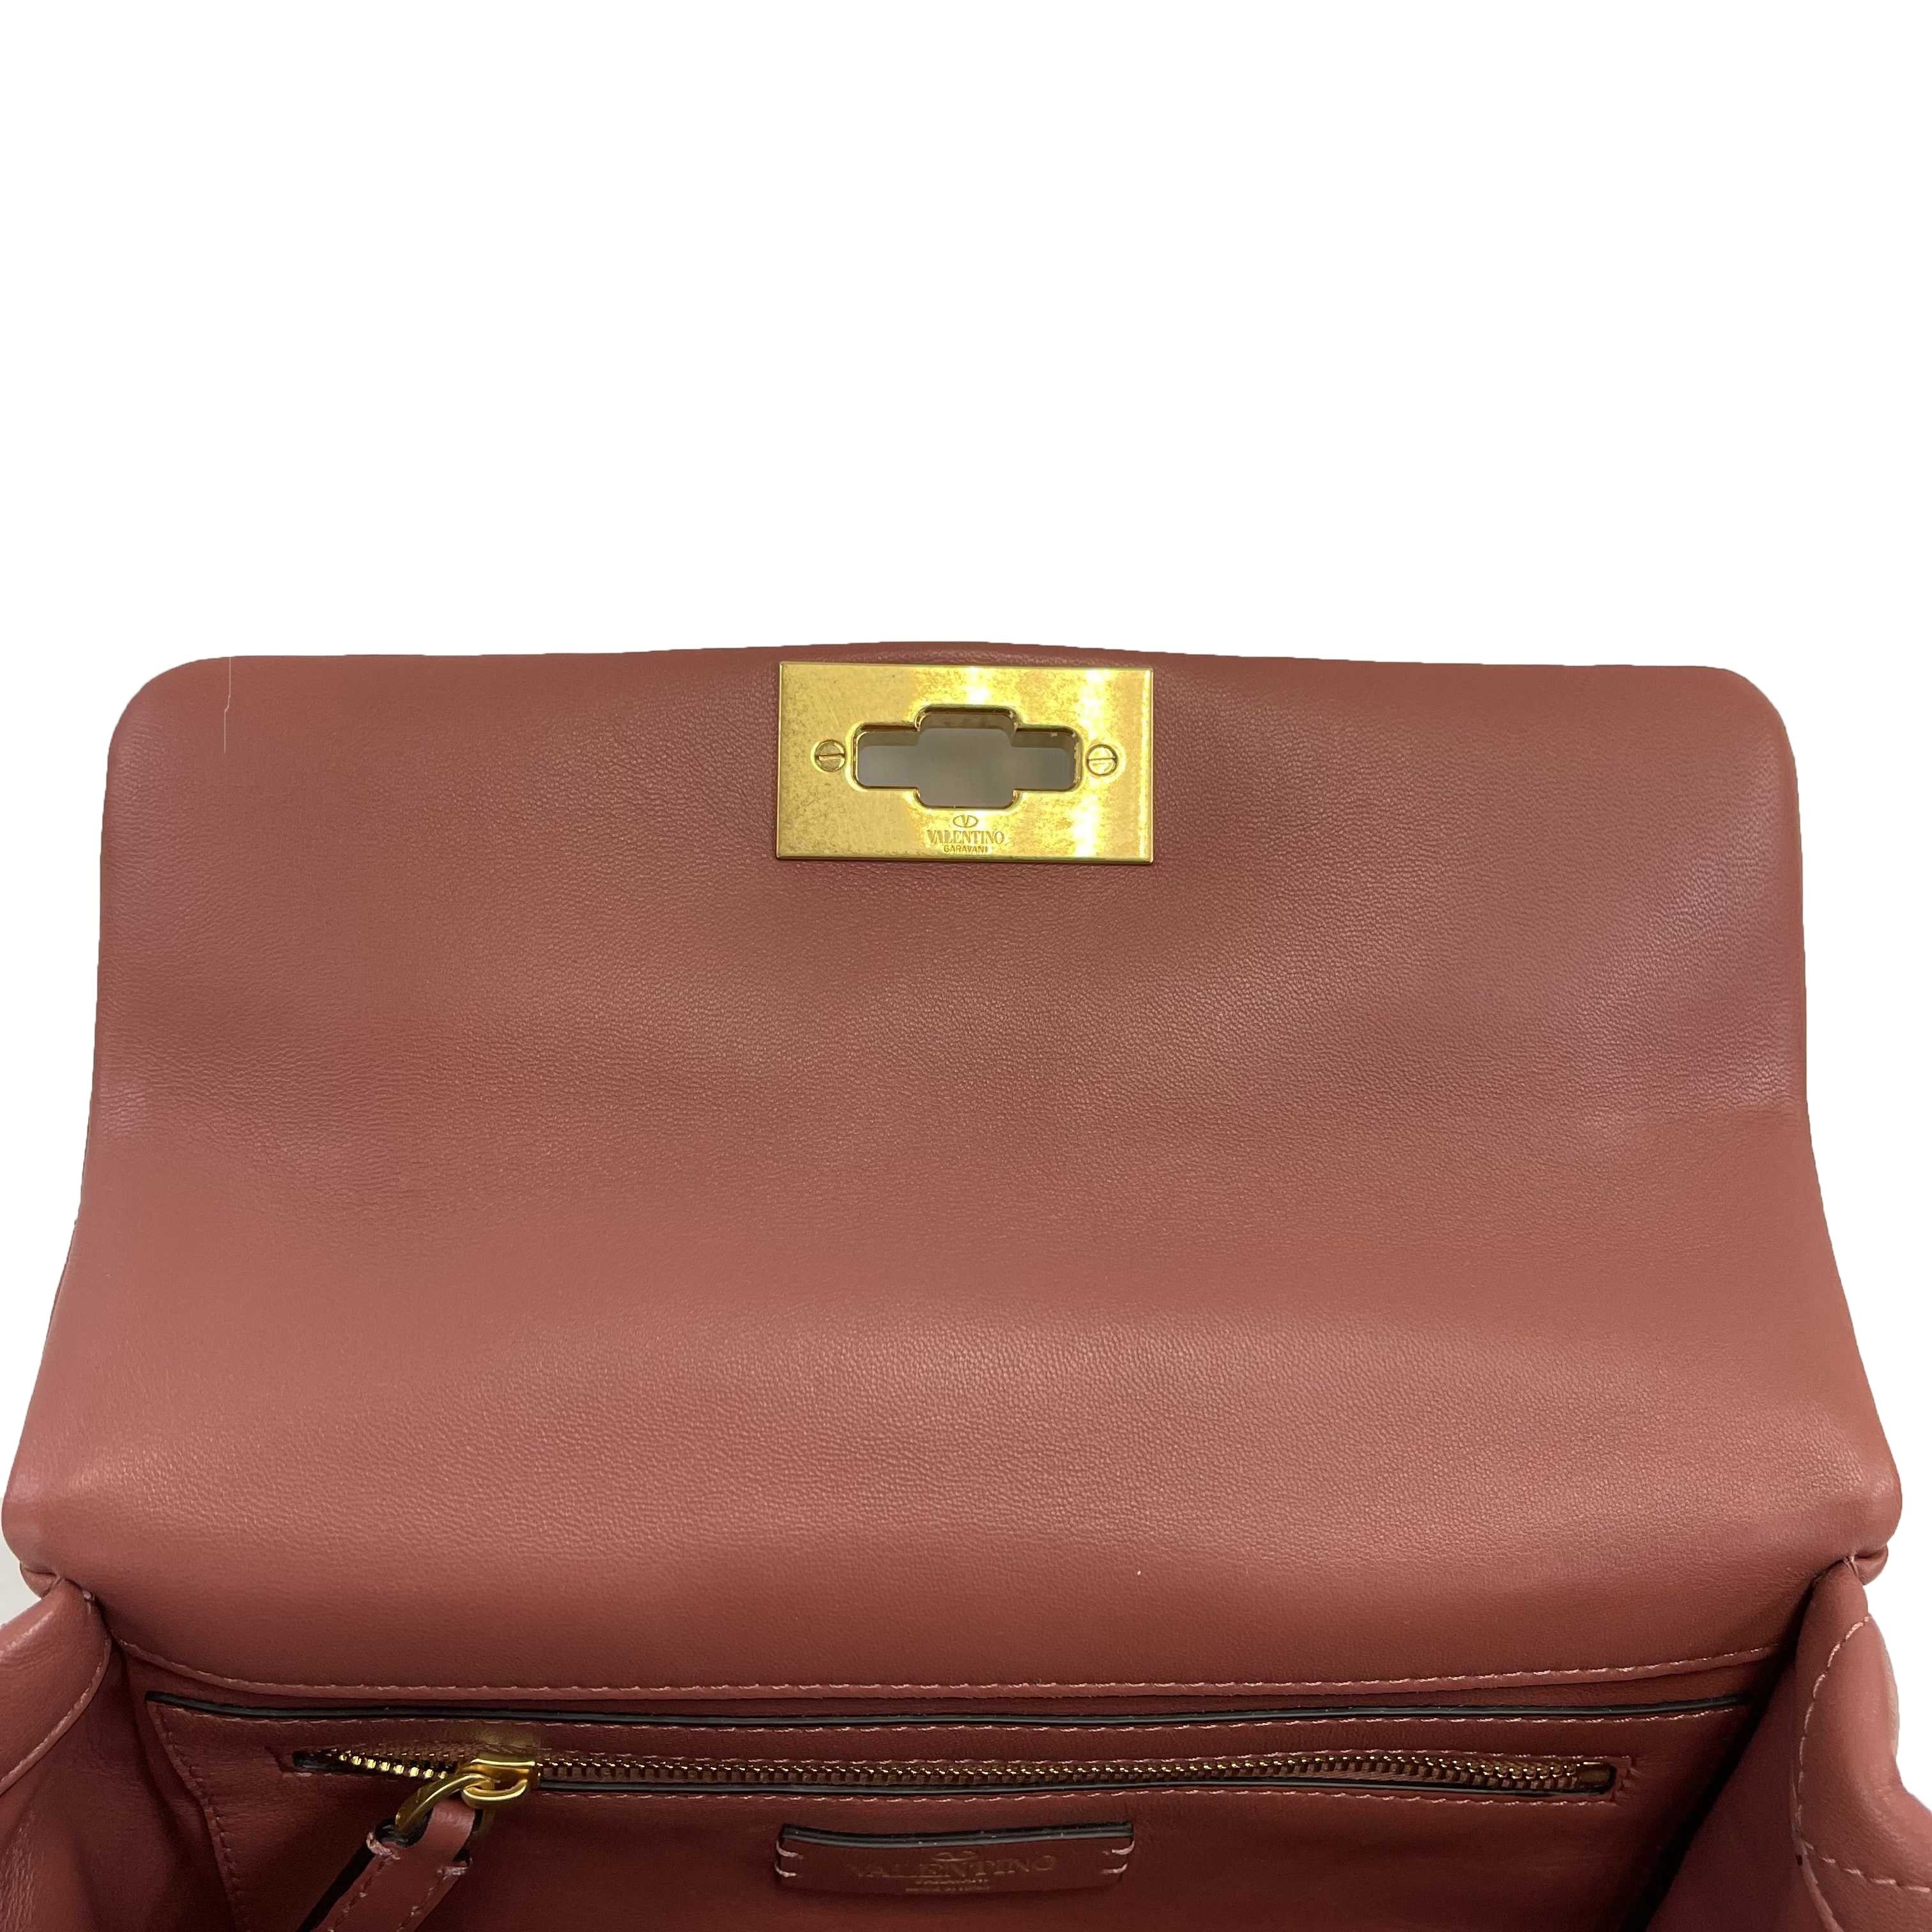 Brown Valentino Garavani Roman Stud Medium Quilted - Ginger - Top Handle Shoulder Bag For Sale